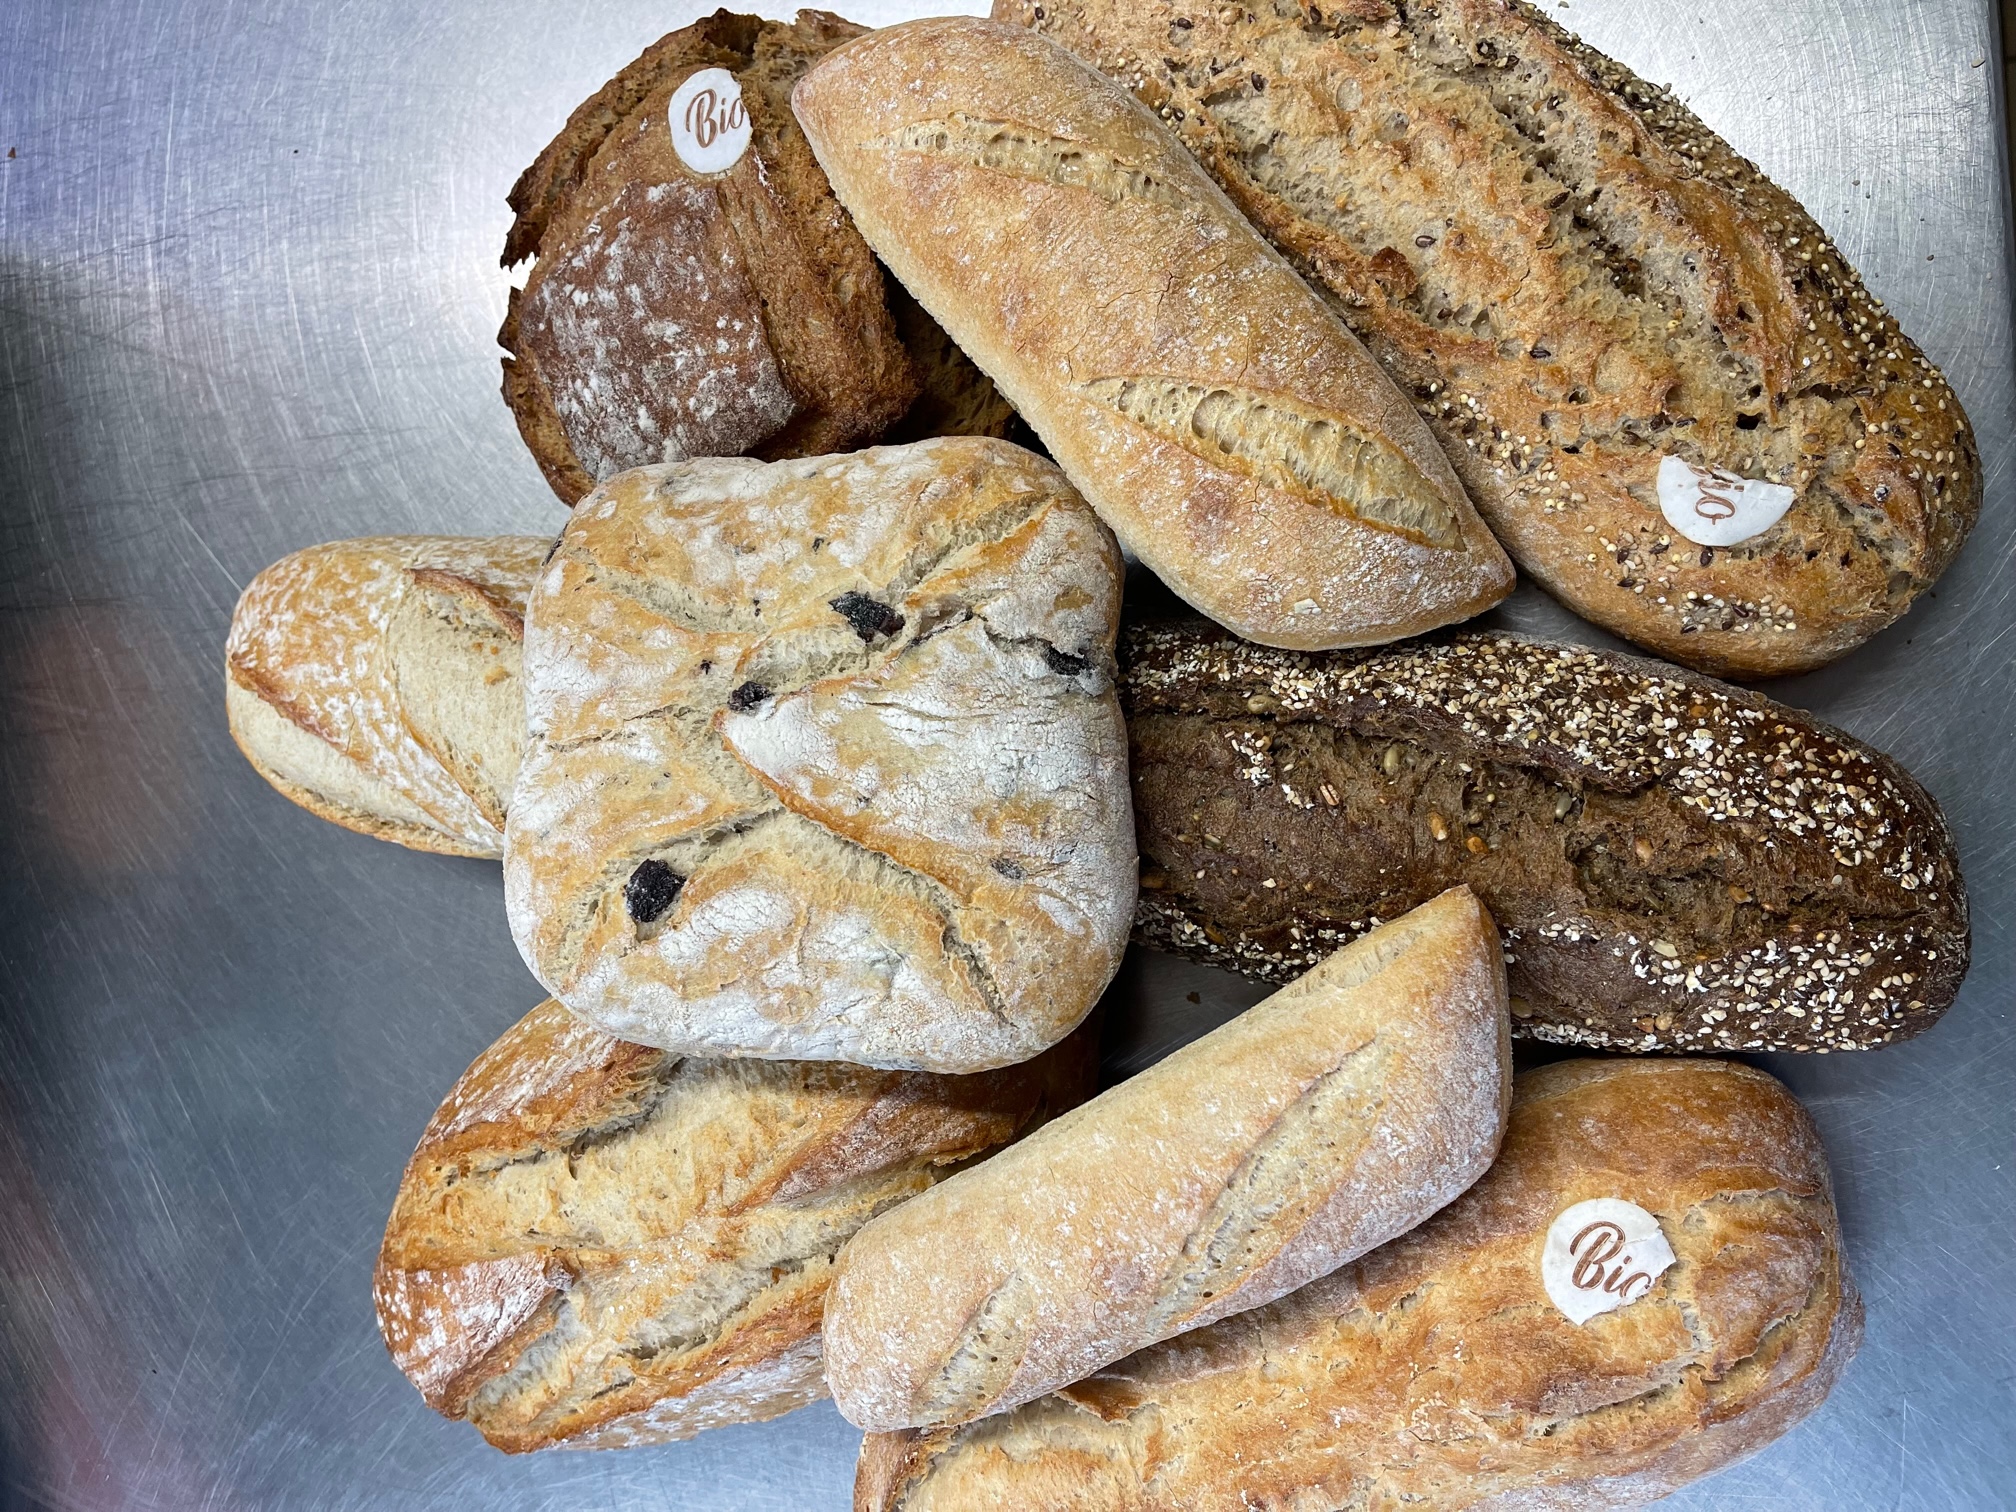 Home baked Artisan bread at Beaulieu Farm Shop